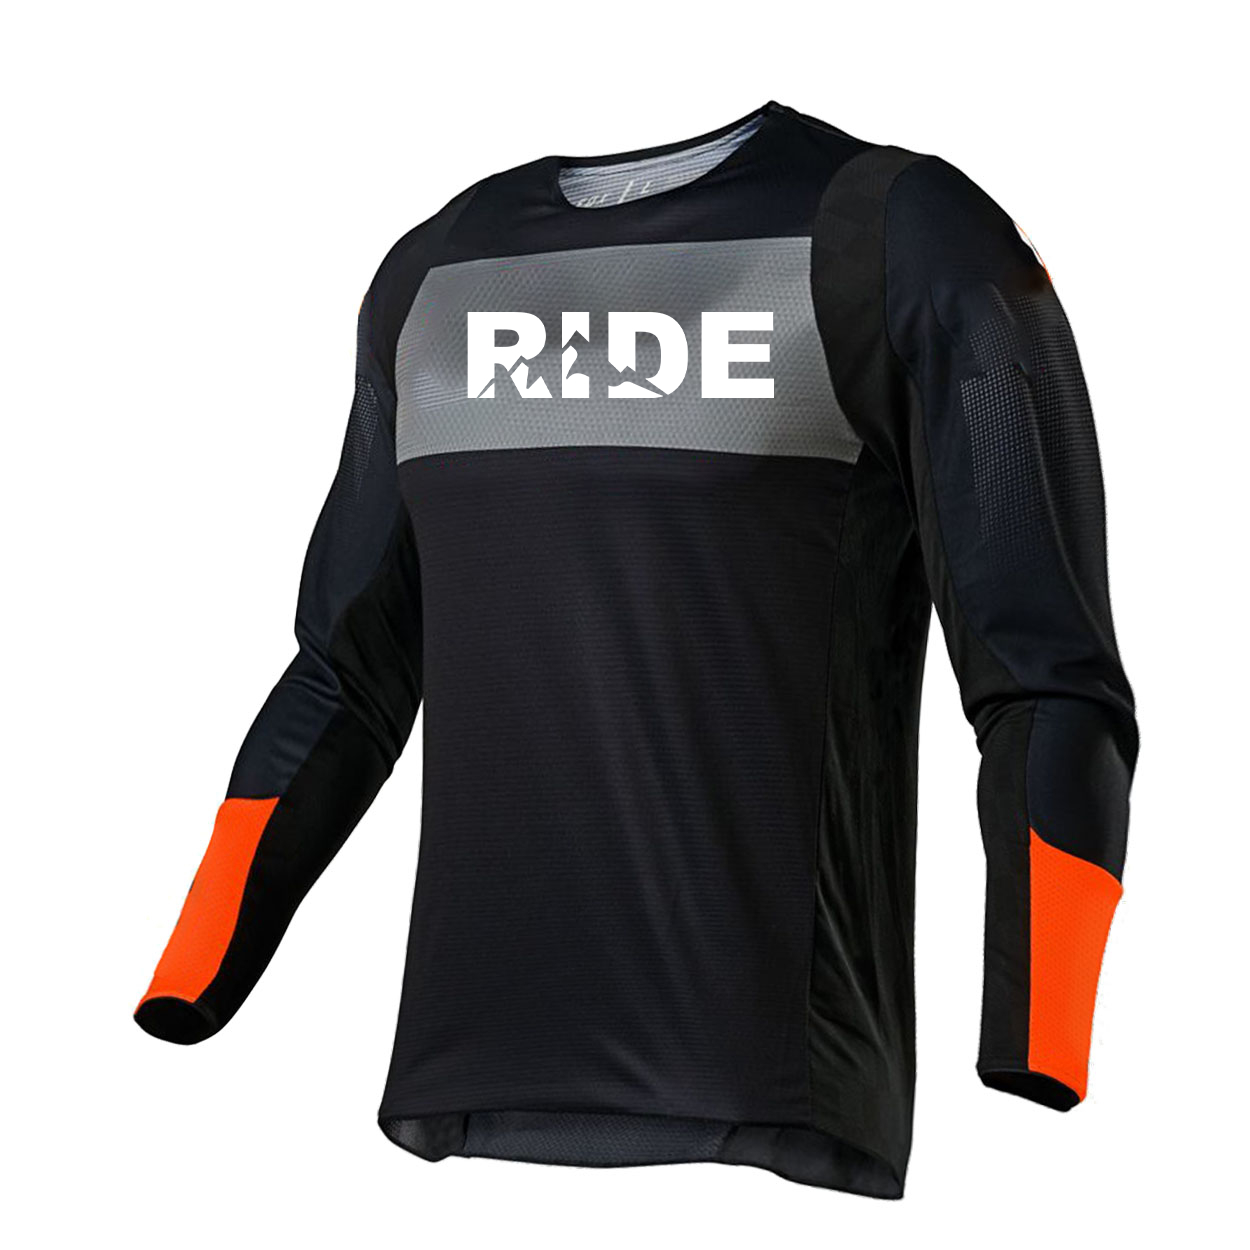 Ride Mountain Logo Classic Performance Jersey Long Sleeve Shirt Black/Gray/Orange